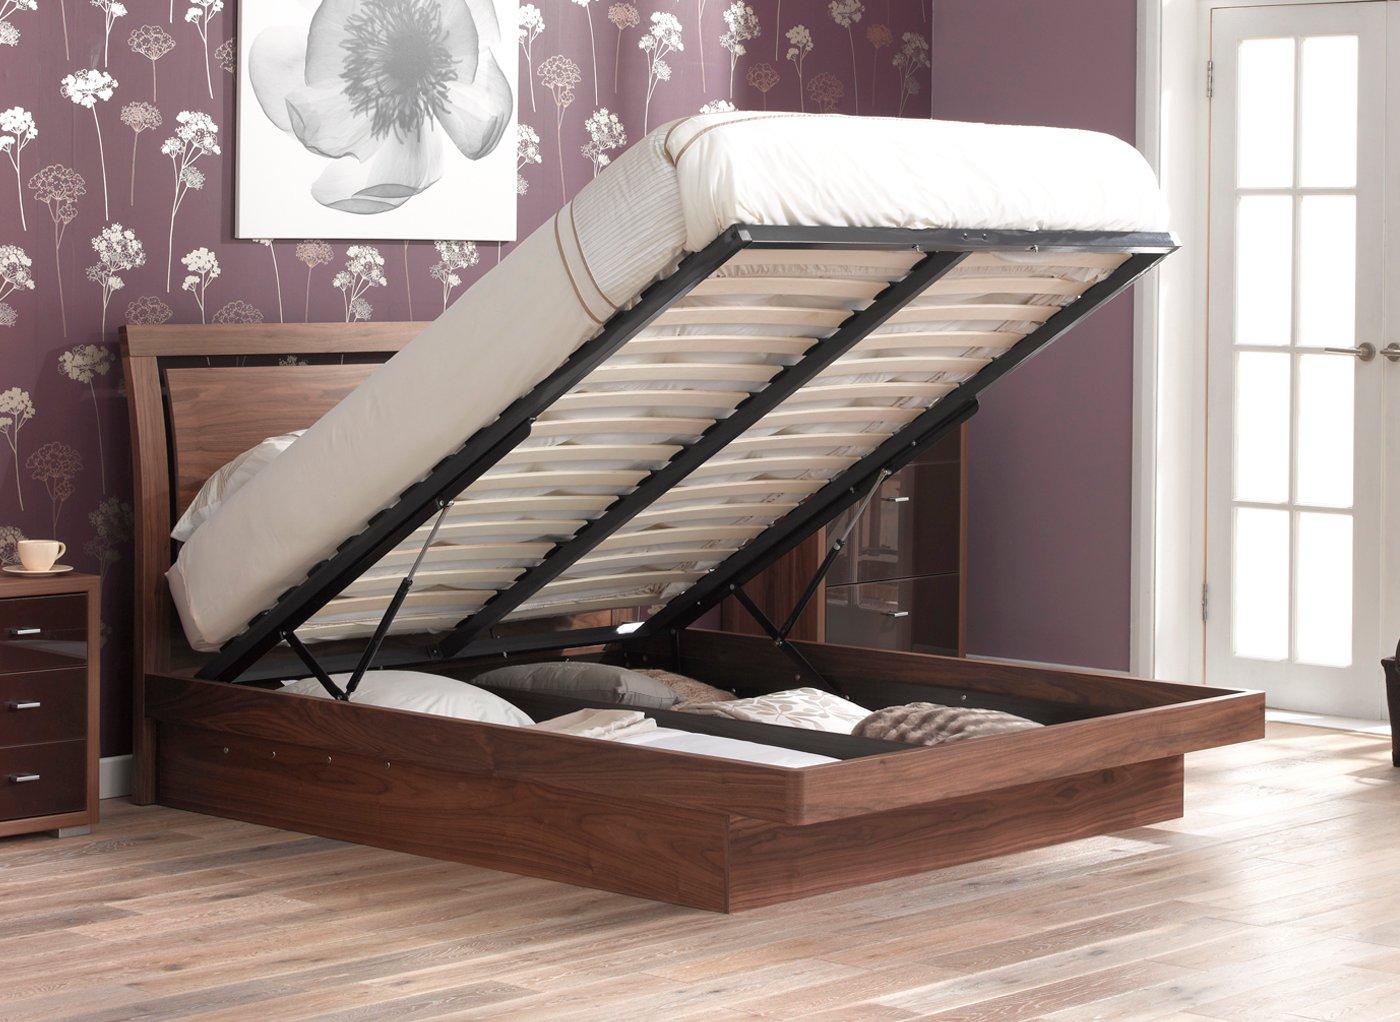 4 foot ottoman beds with mattress